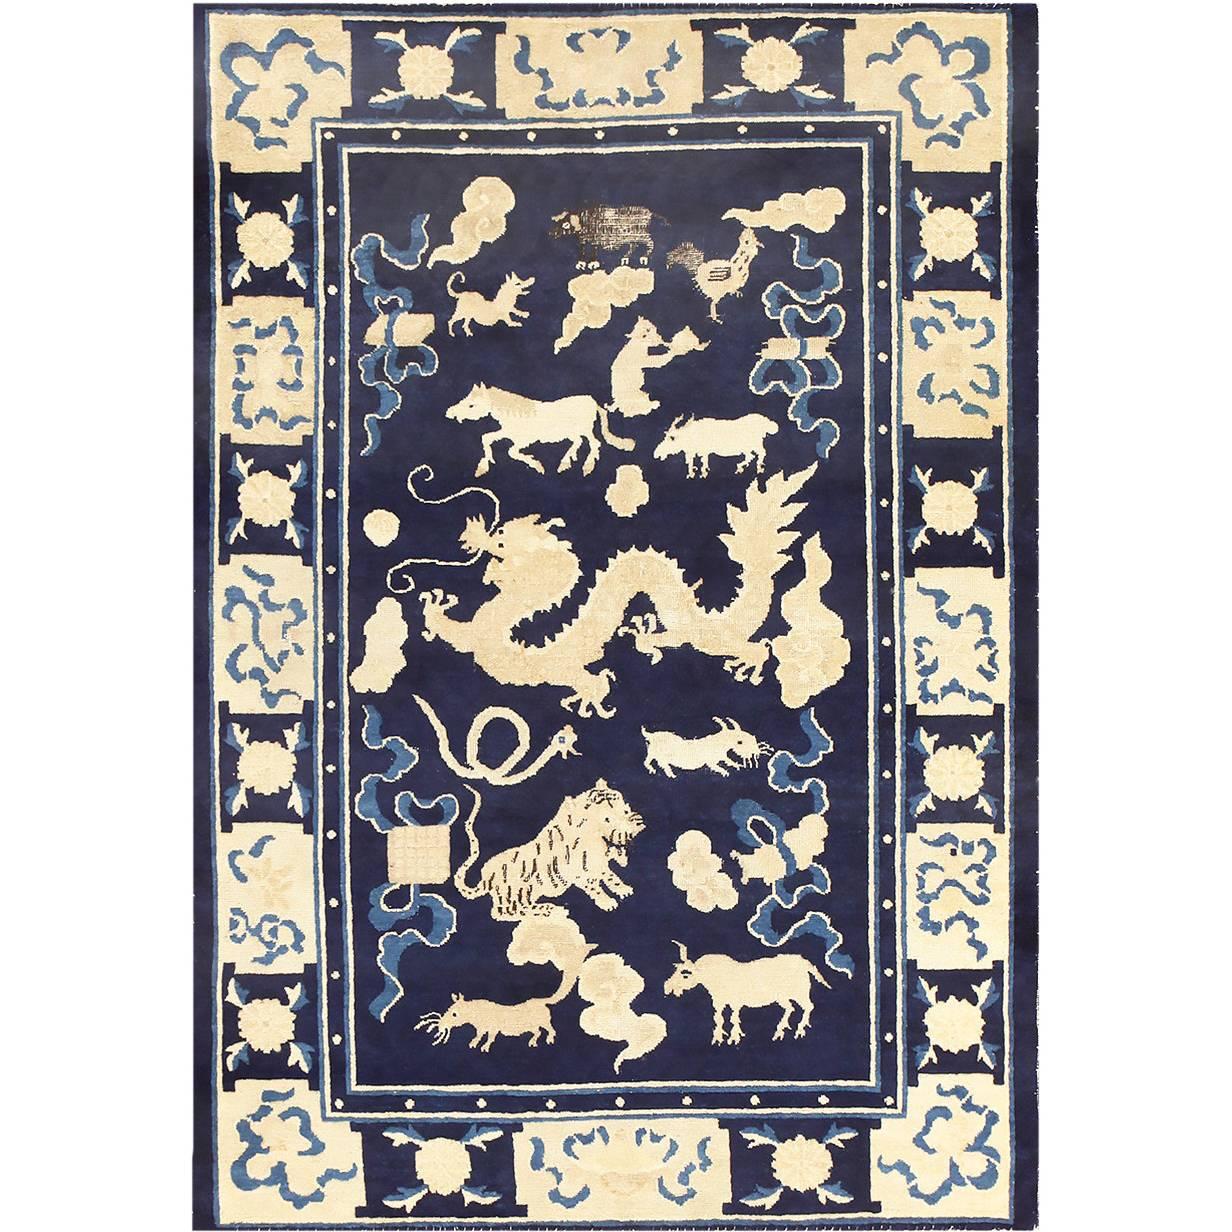 Antique Chinese Zodiac Rug